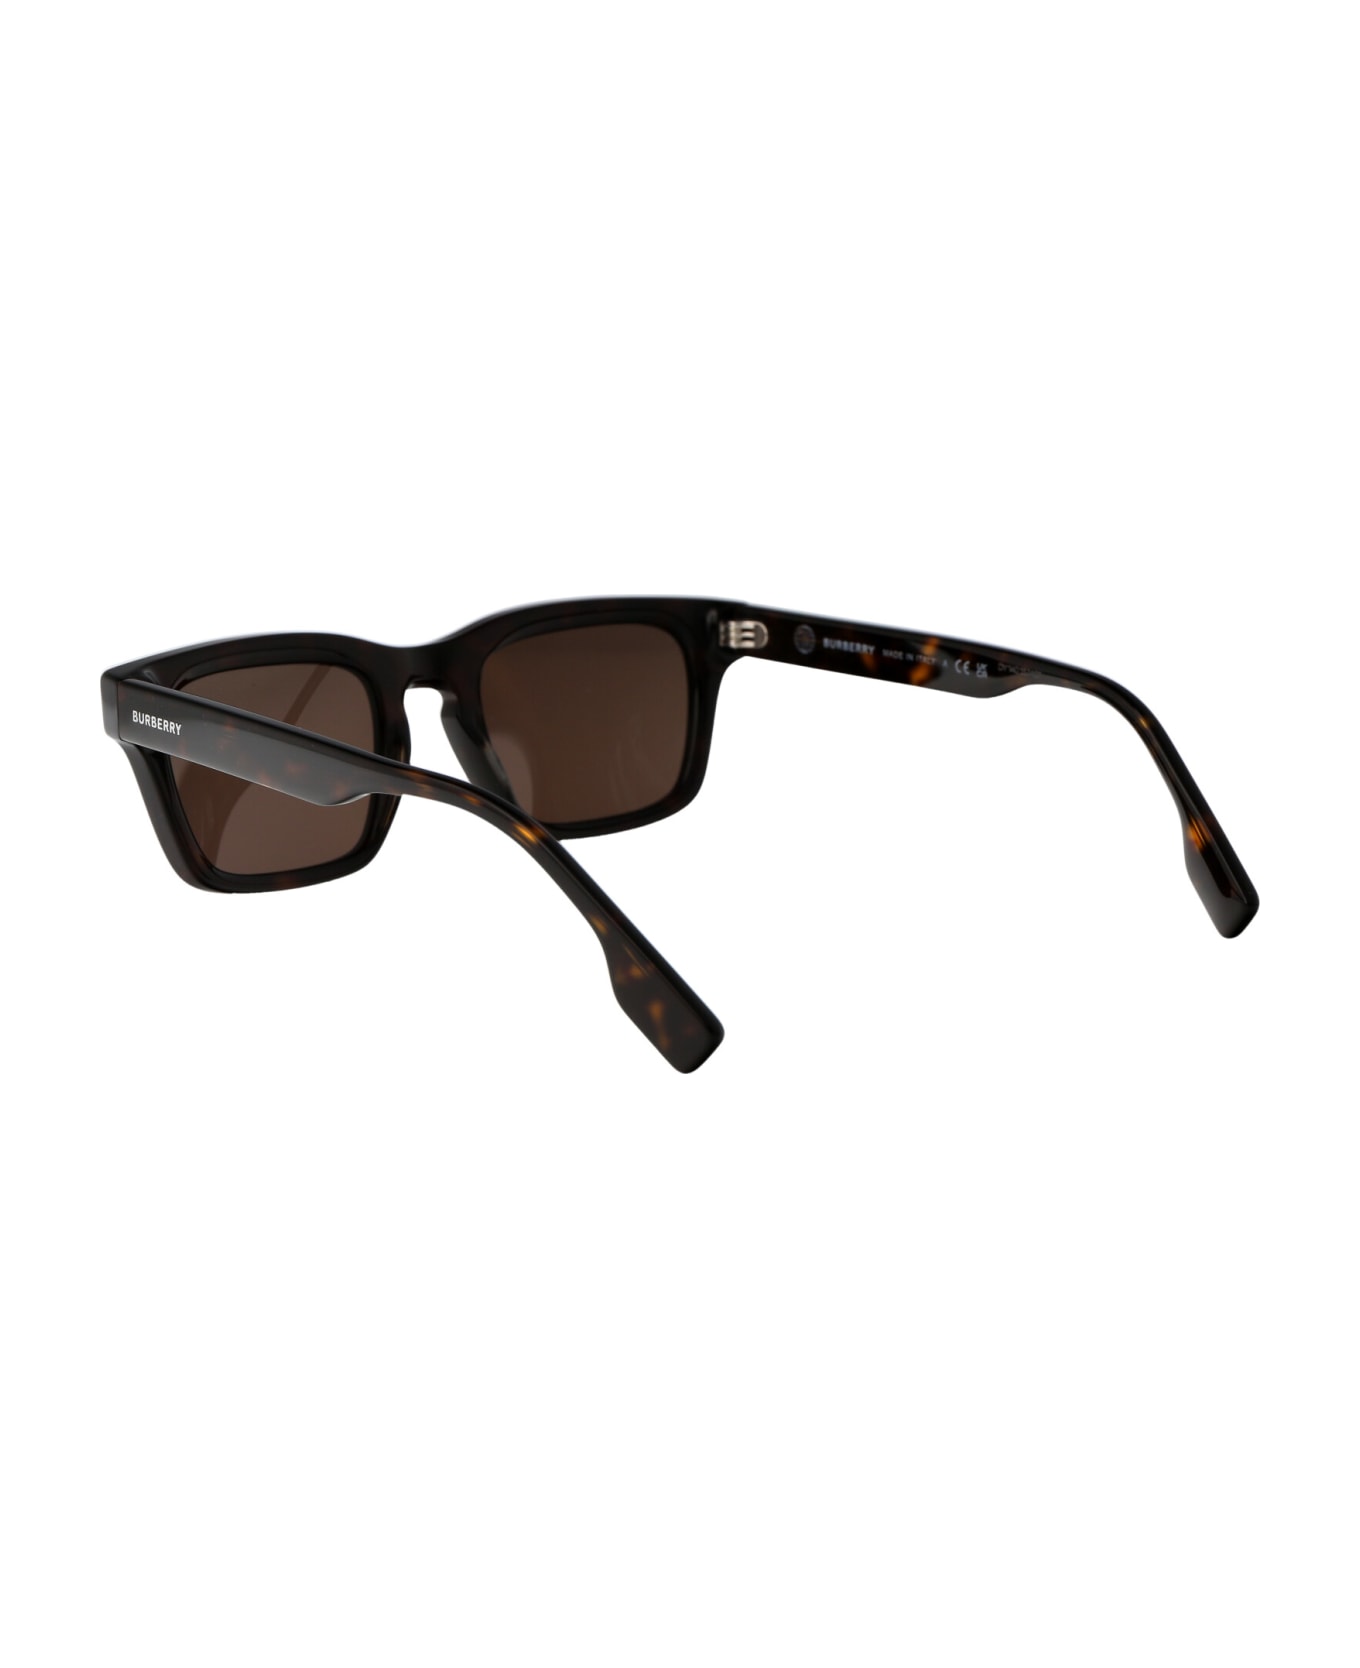 Burberry Eyewear 0be4403 Sunglasses - 300273 DARK HAVANA サングラス